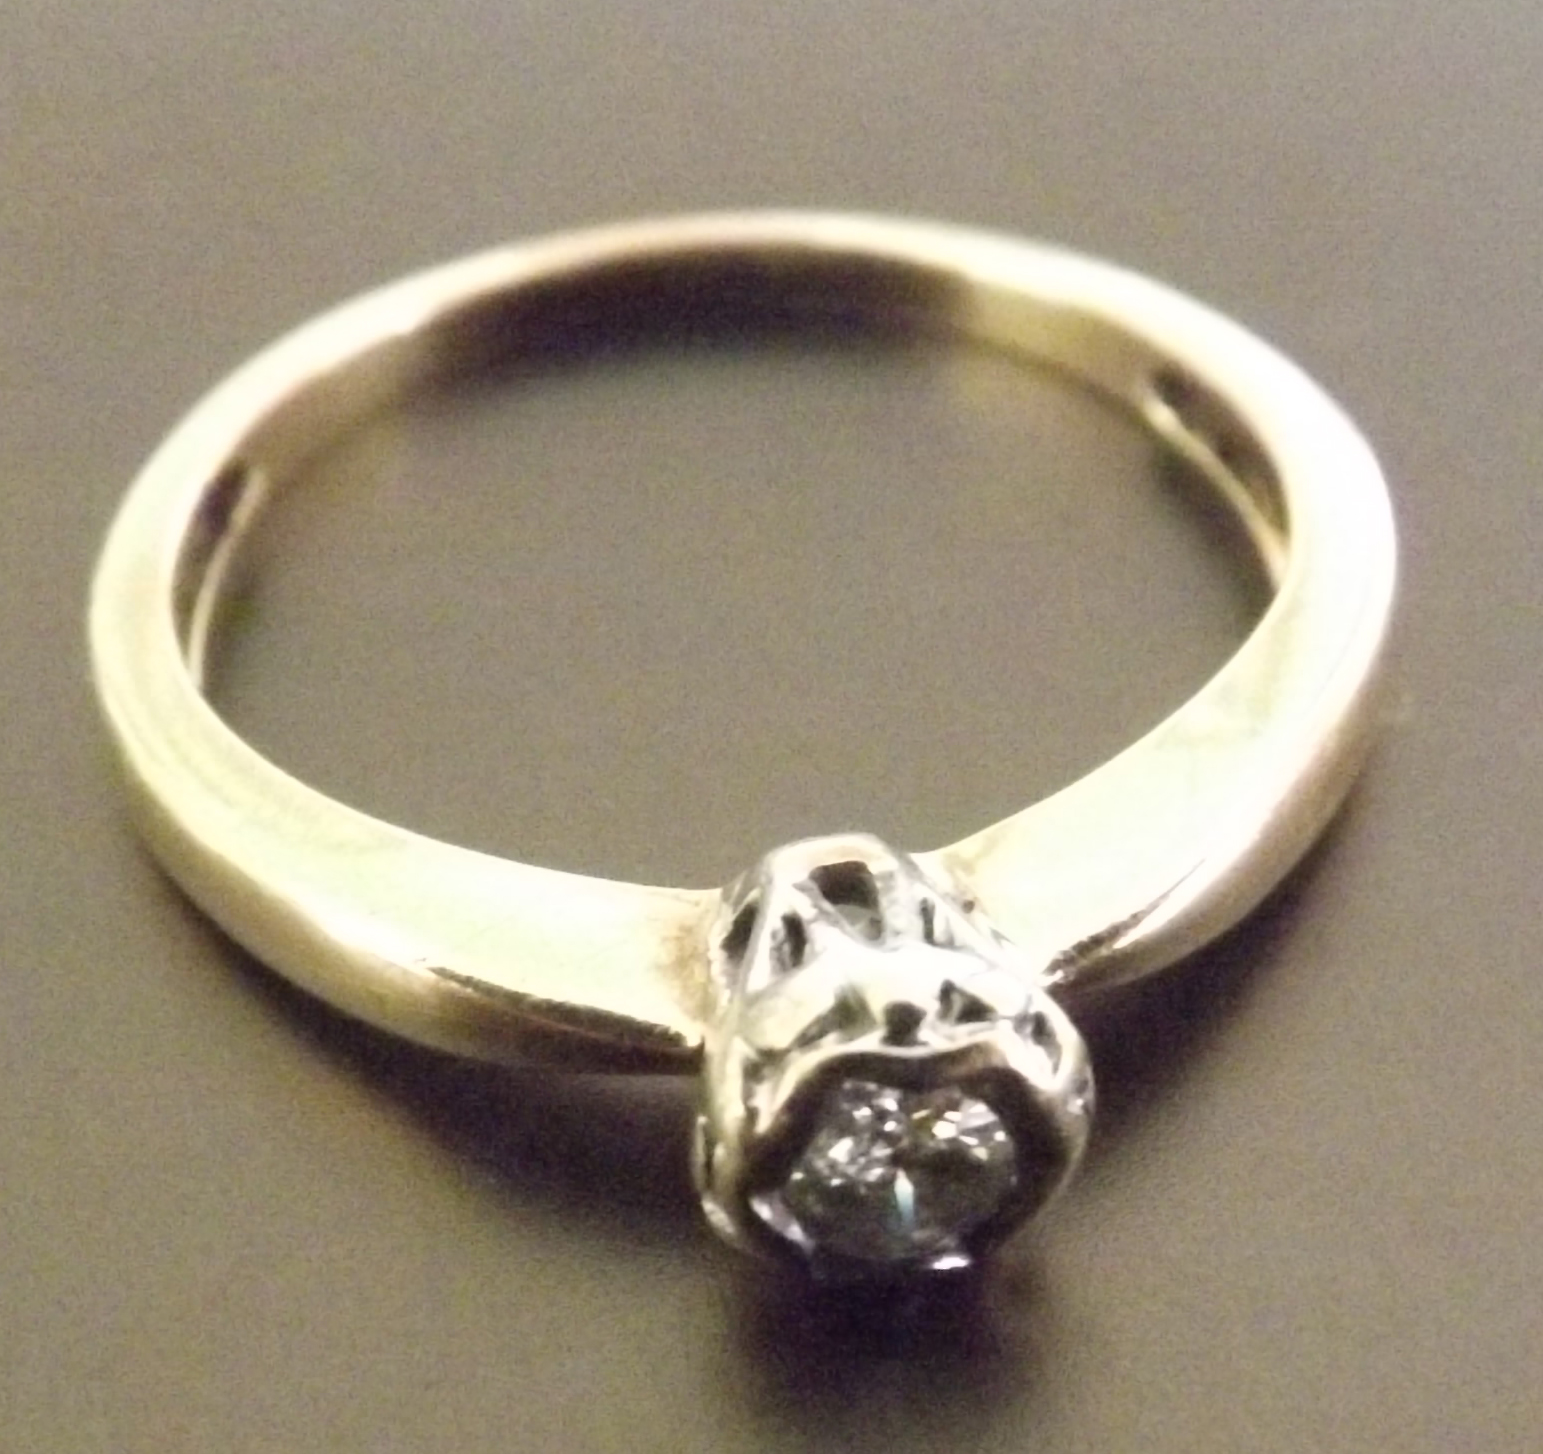 A single stone diamond solitaire ring, a brilliant cut single stone diamond of around .25 carats set